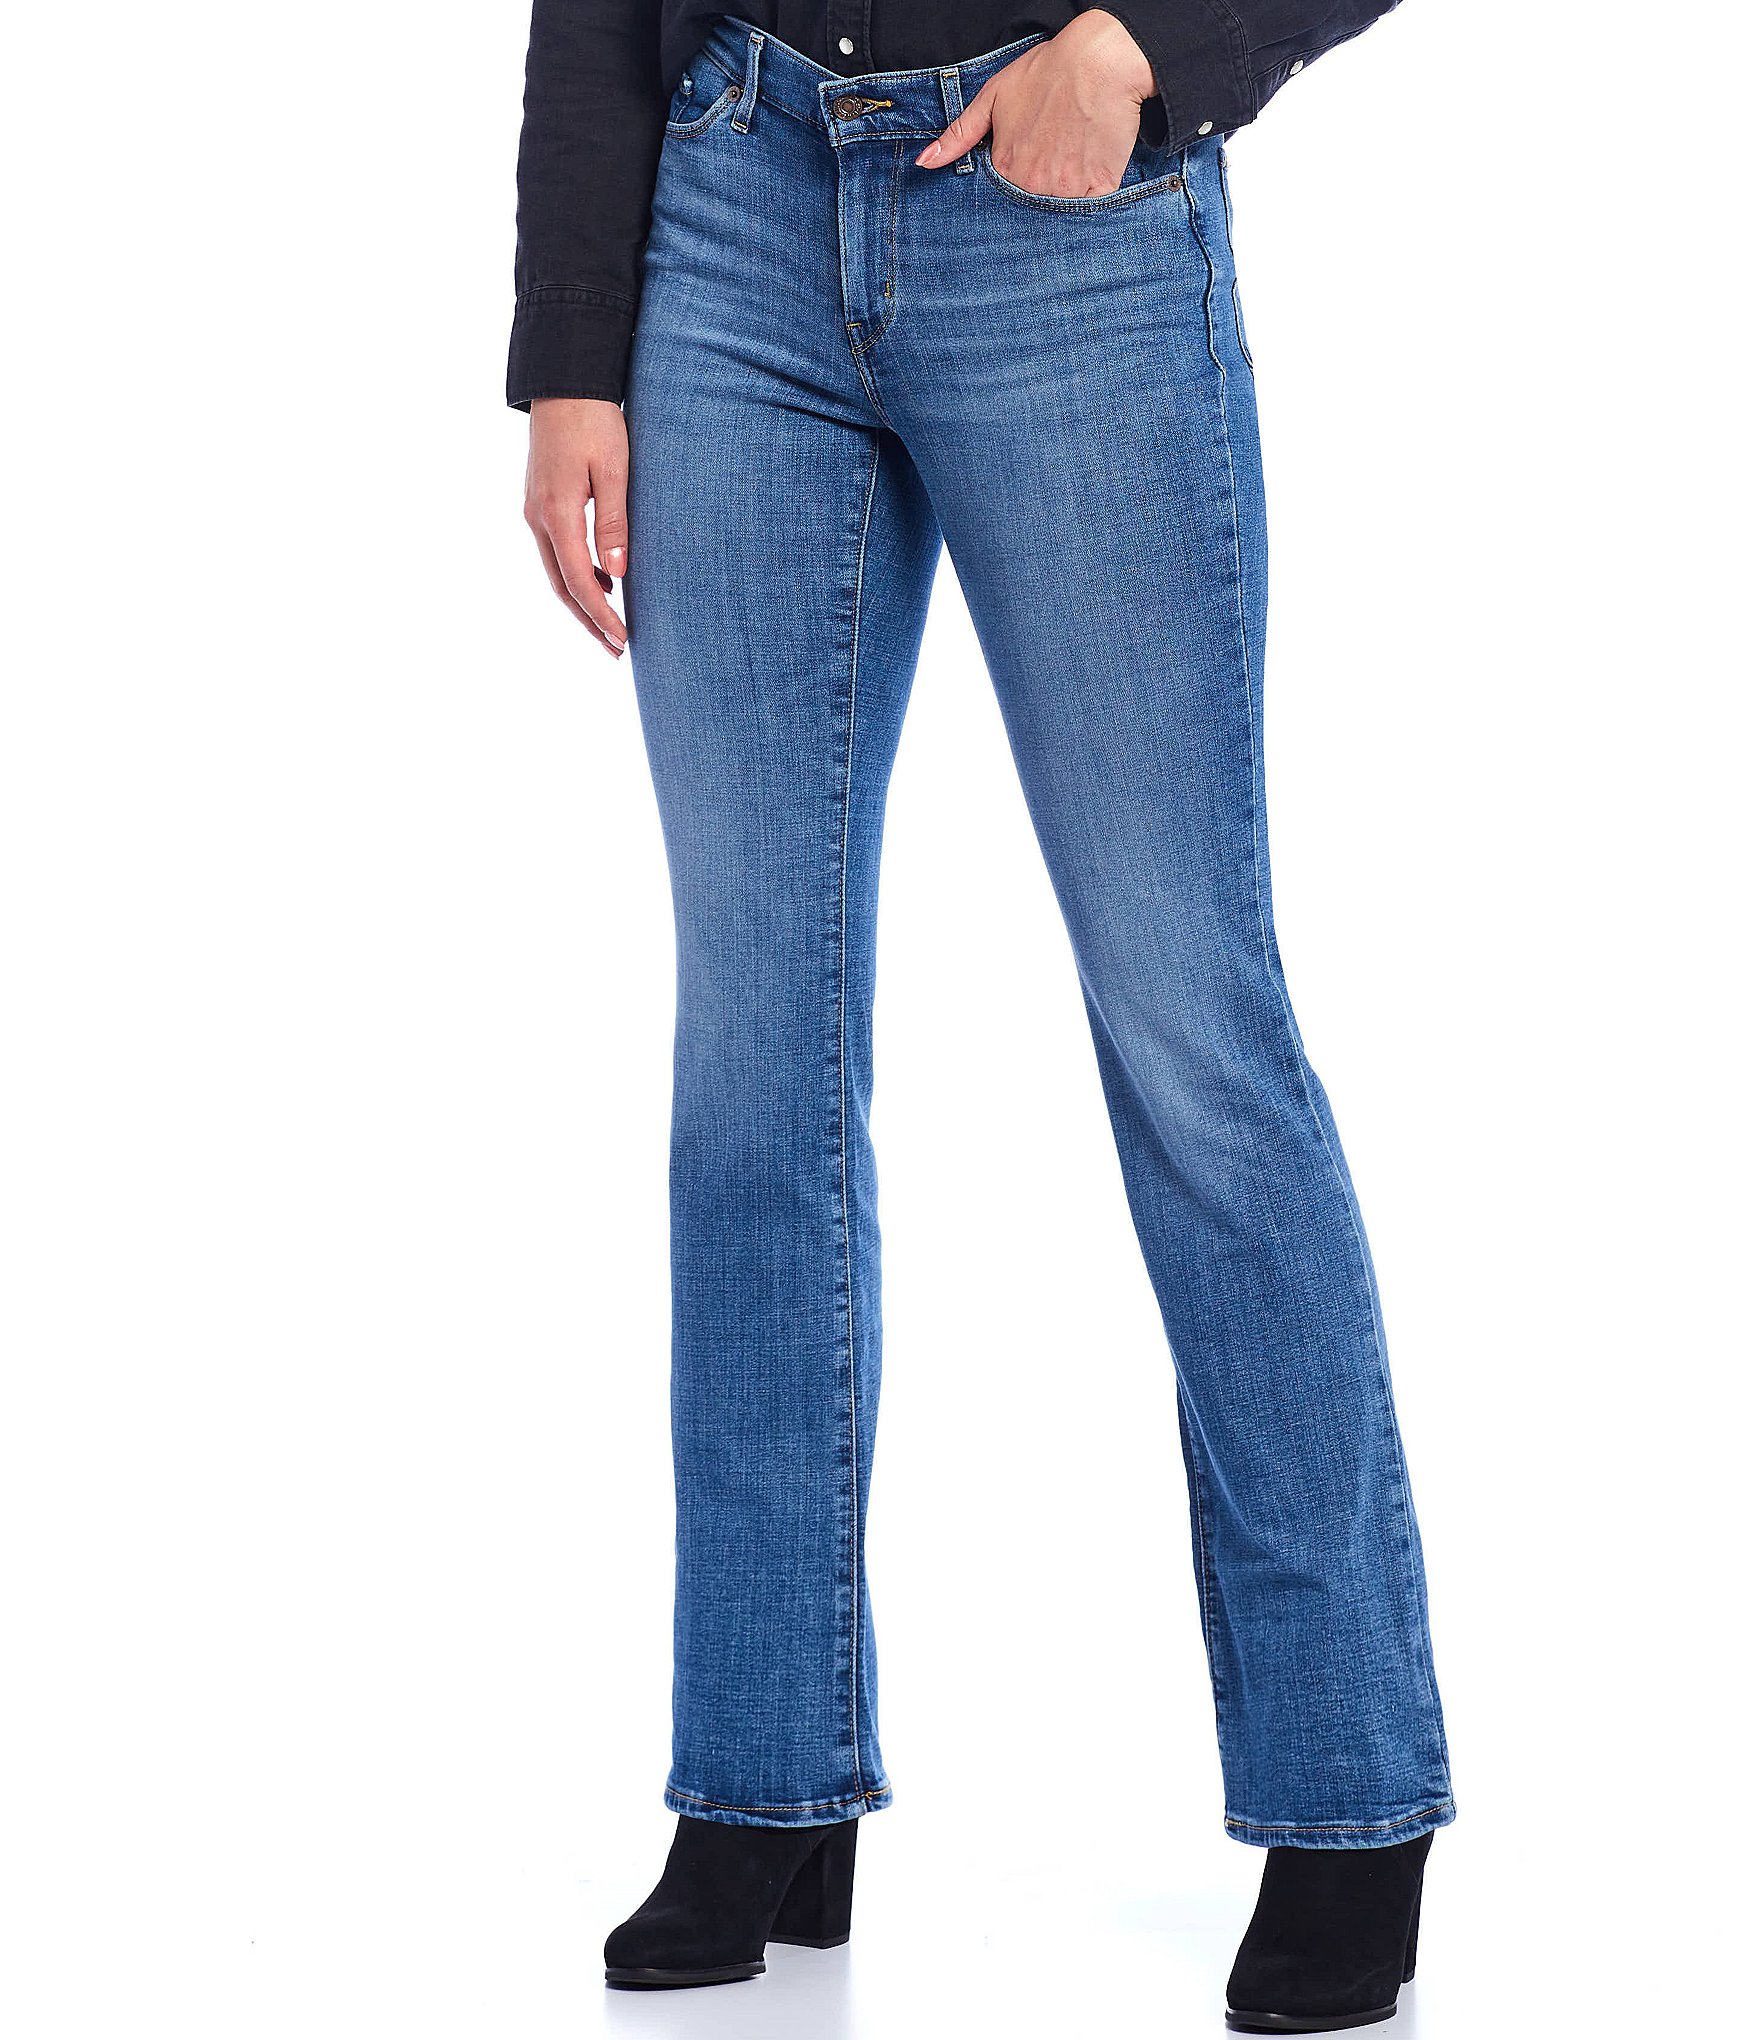 Introducir 48+ imagen levi's mid rise bootcut jeans - Abzlocal.mx